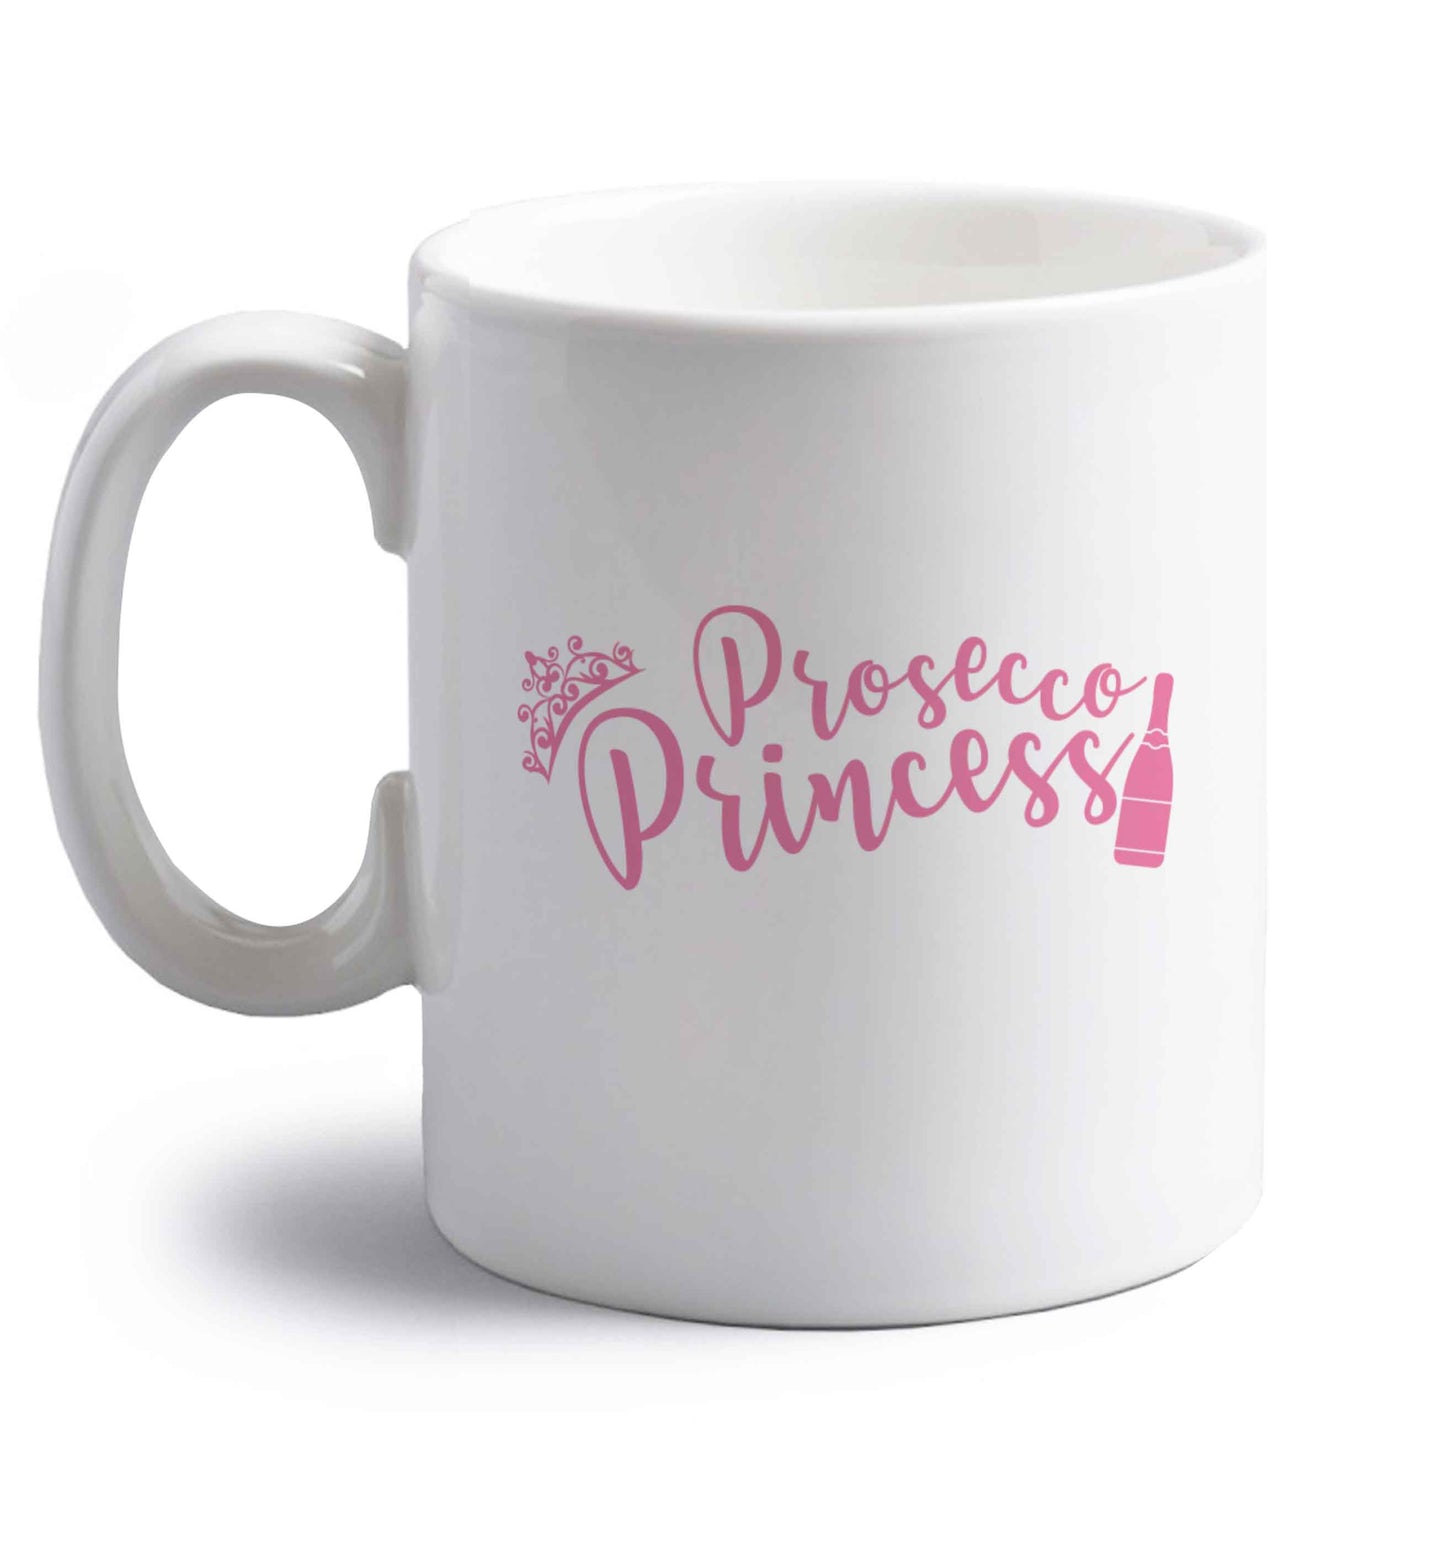 Prosecco princess right handed white ceramic mug 